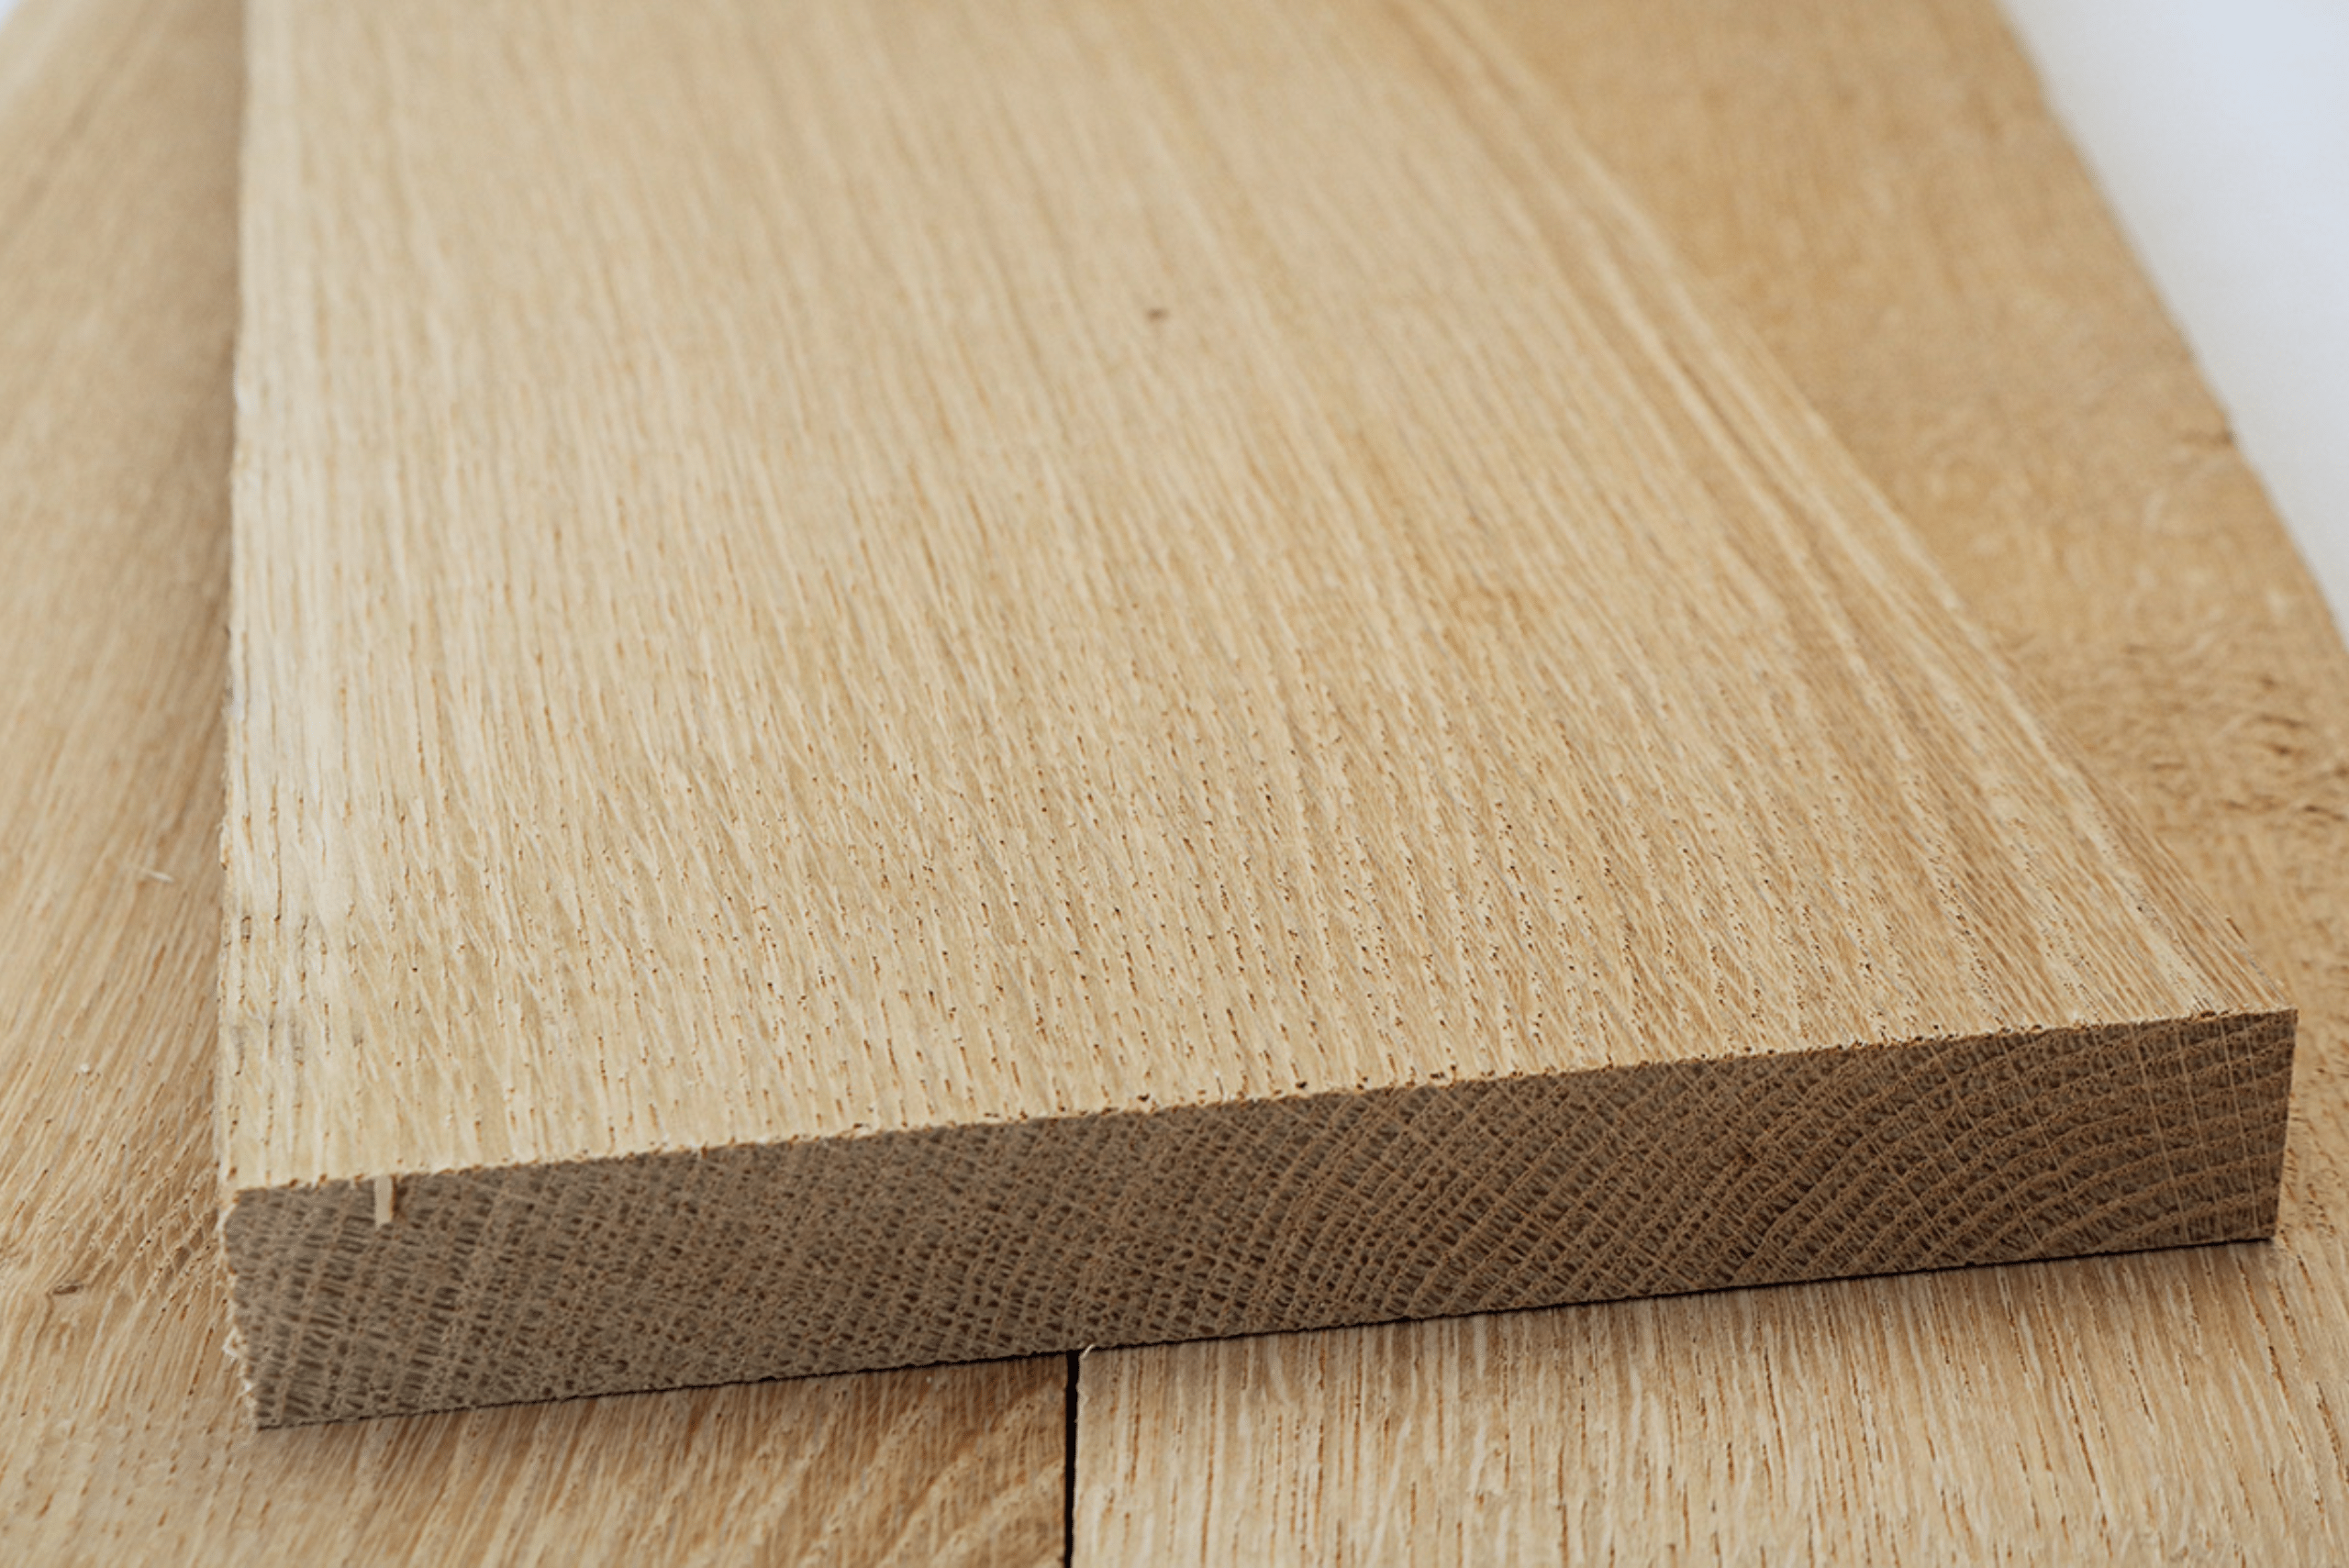 Rift sawn wooden board.